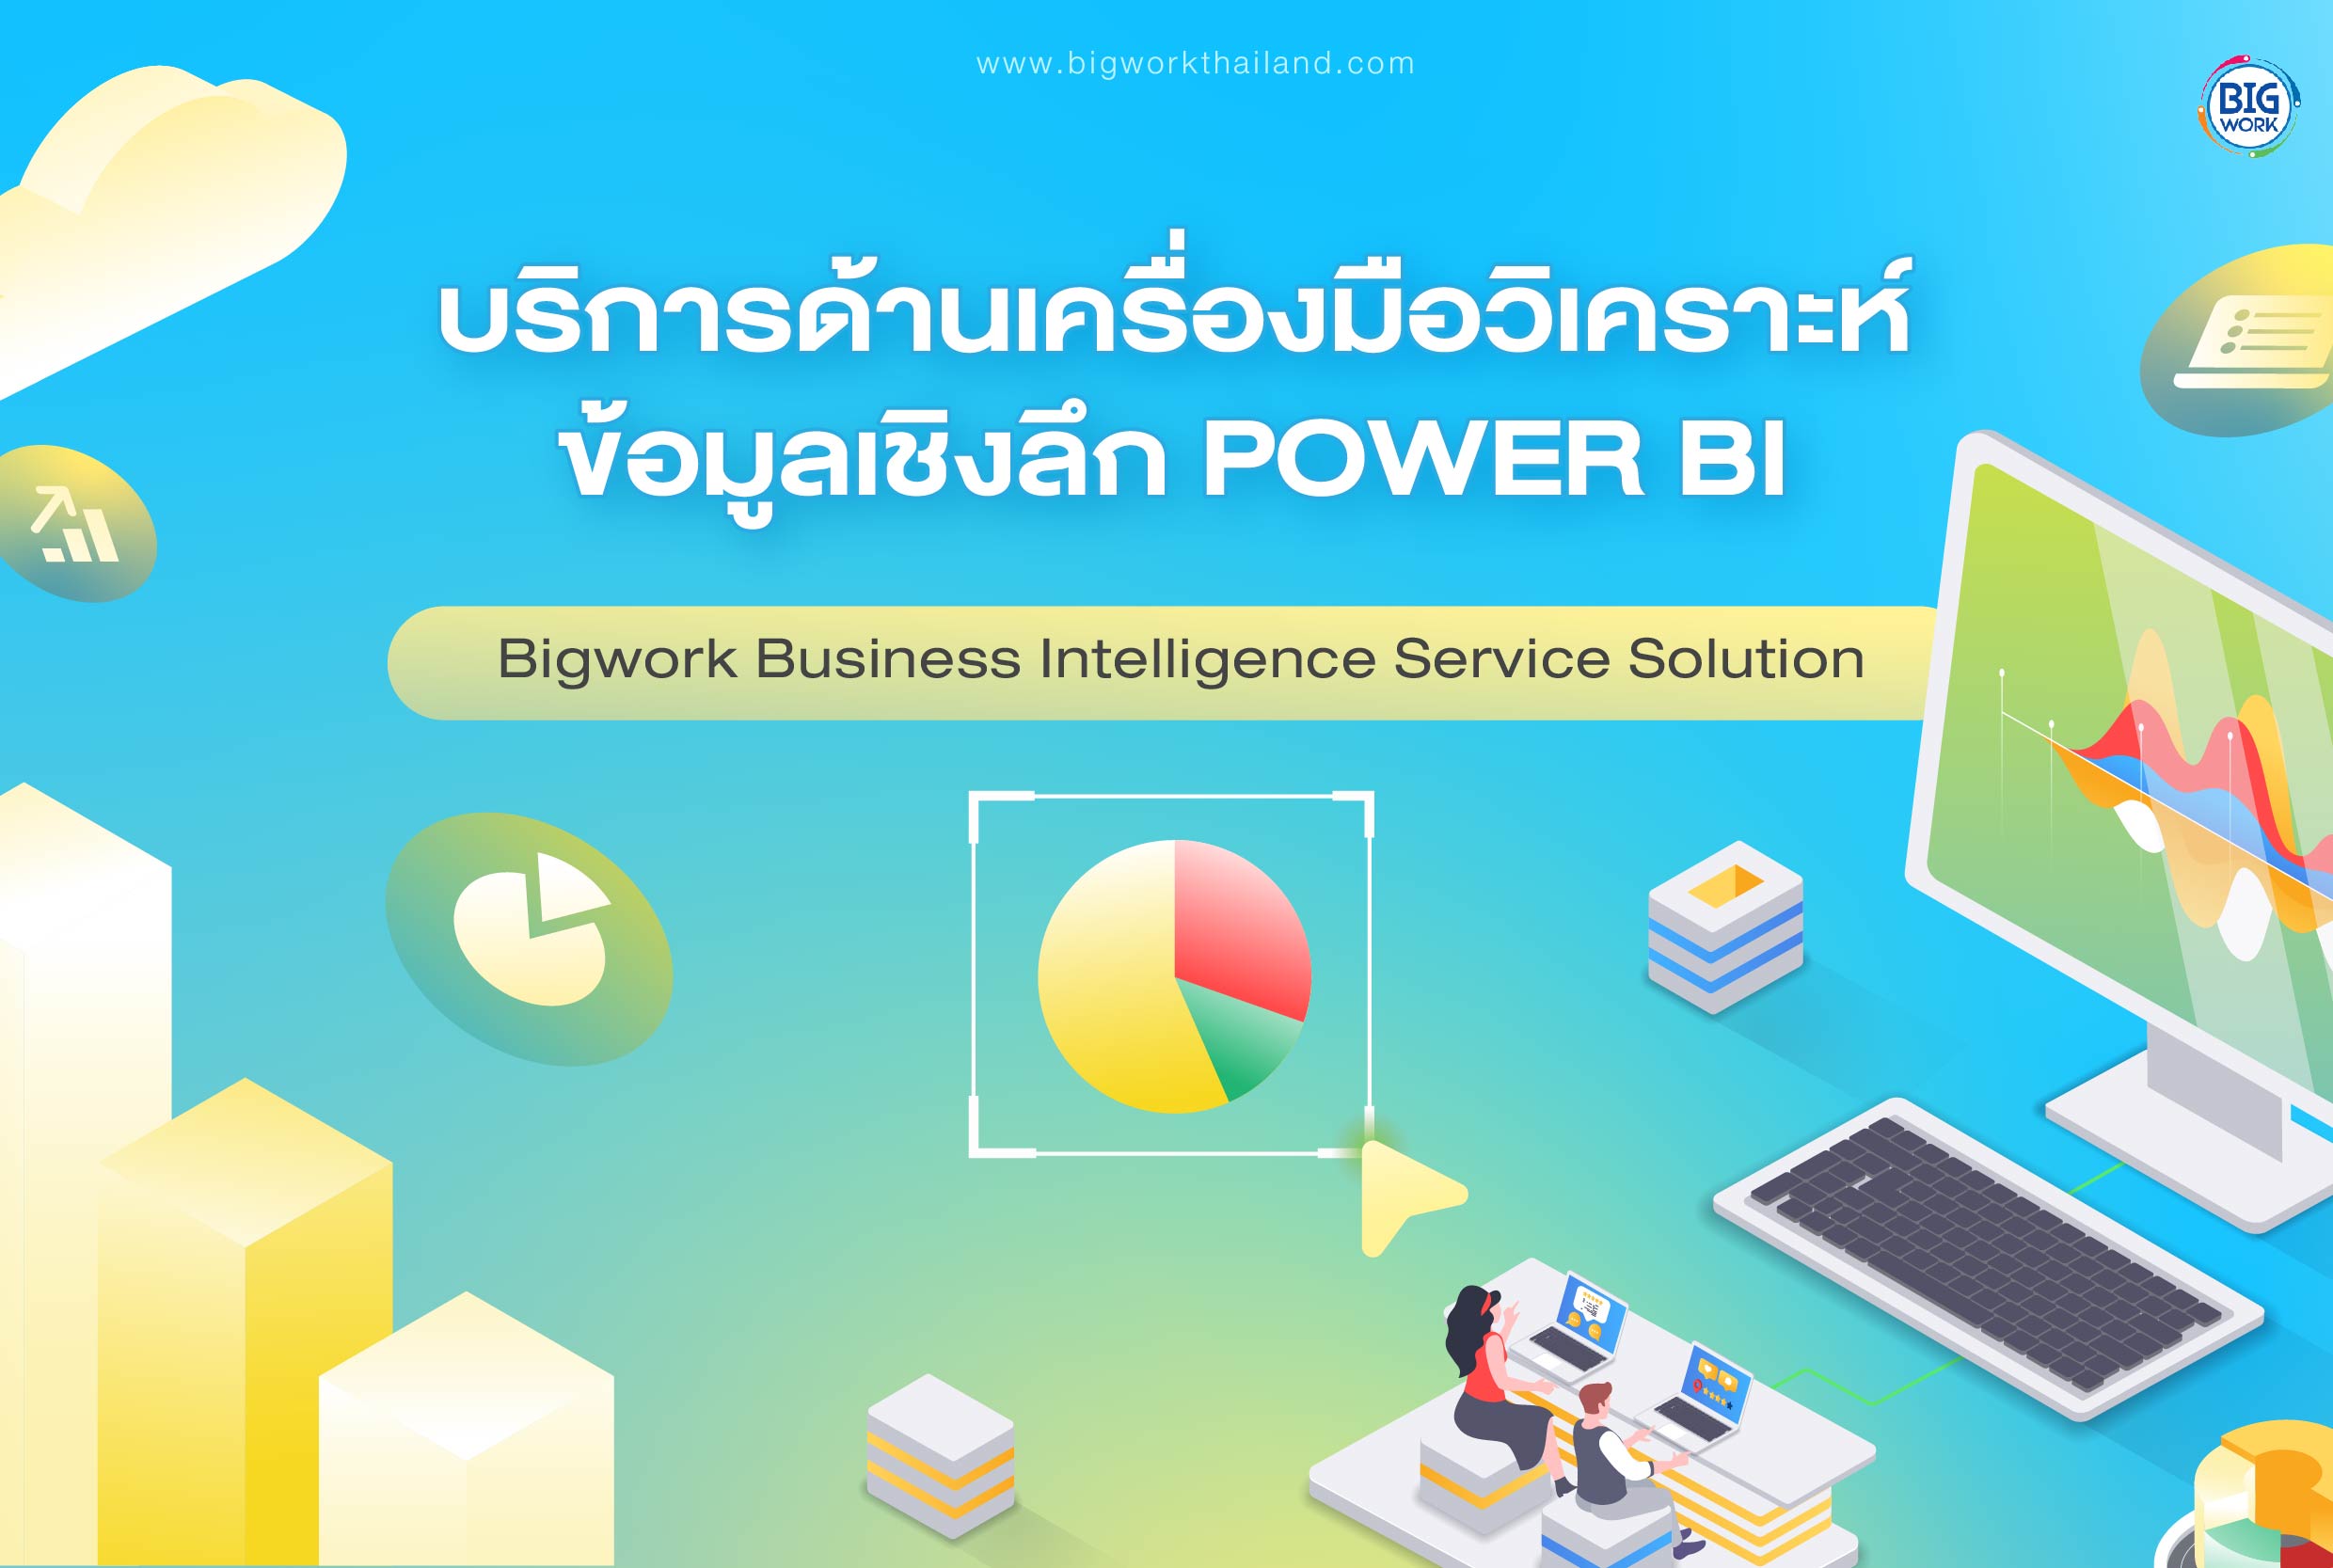 Bigwork Business Intelligence Service Solution Microsoft Power BI